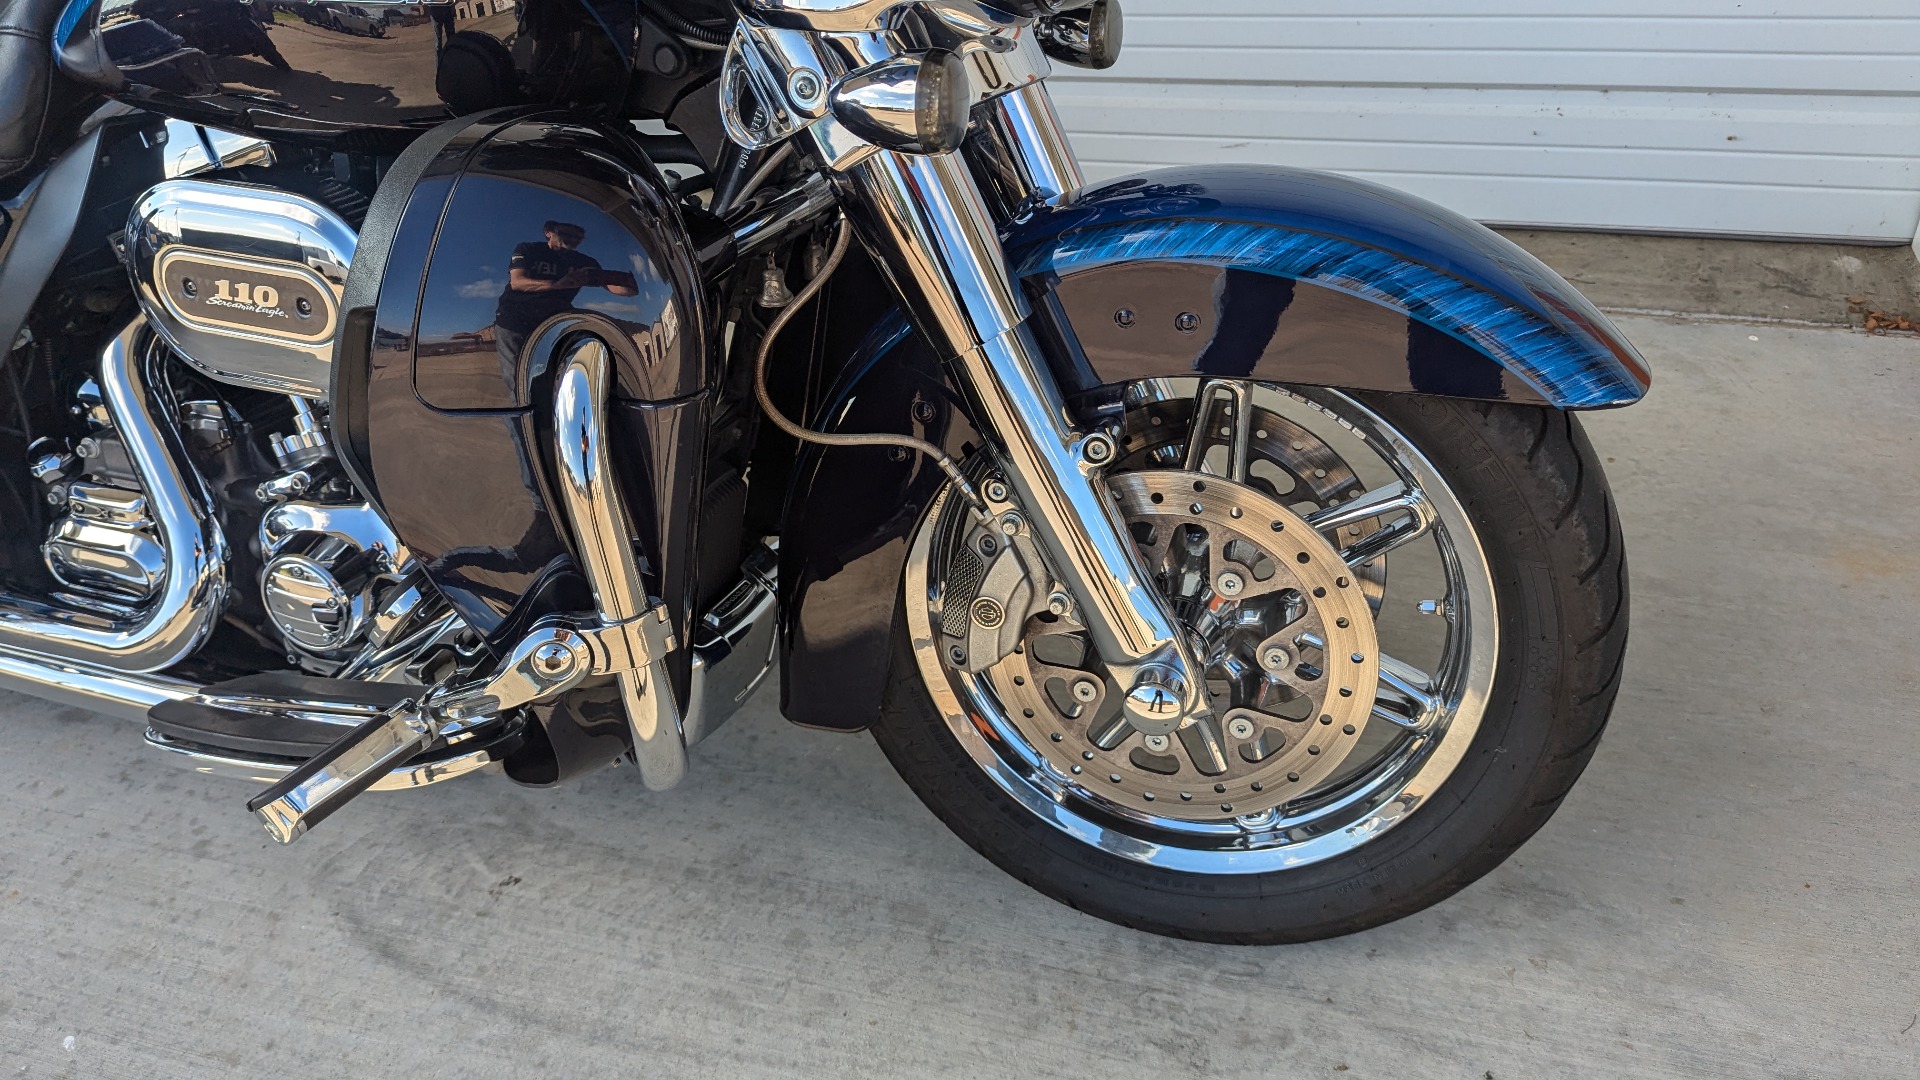 2014 Harley Davidson CVO Limited for sale in mississippi - Photo 3